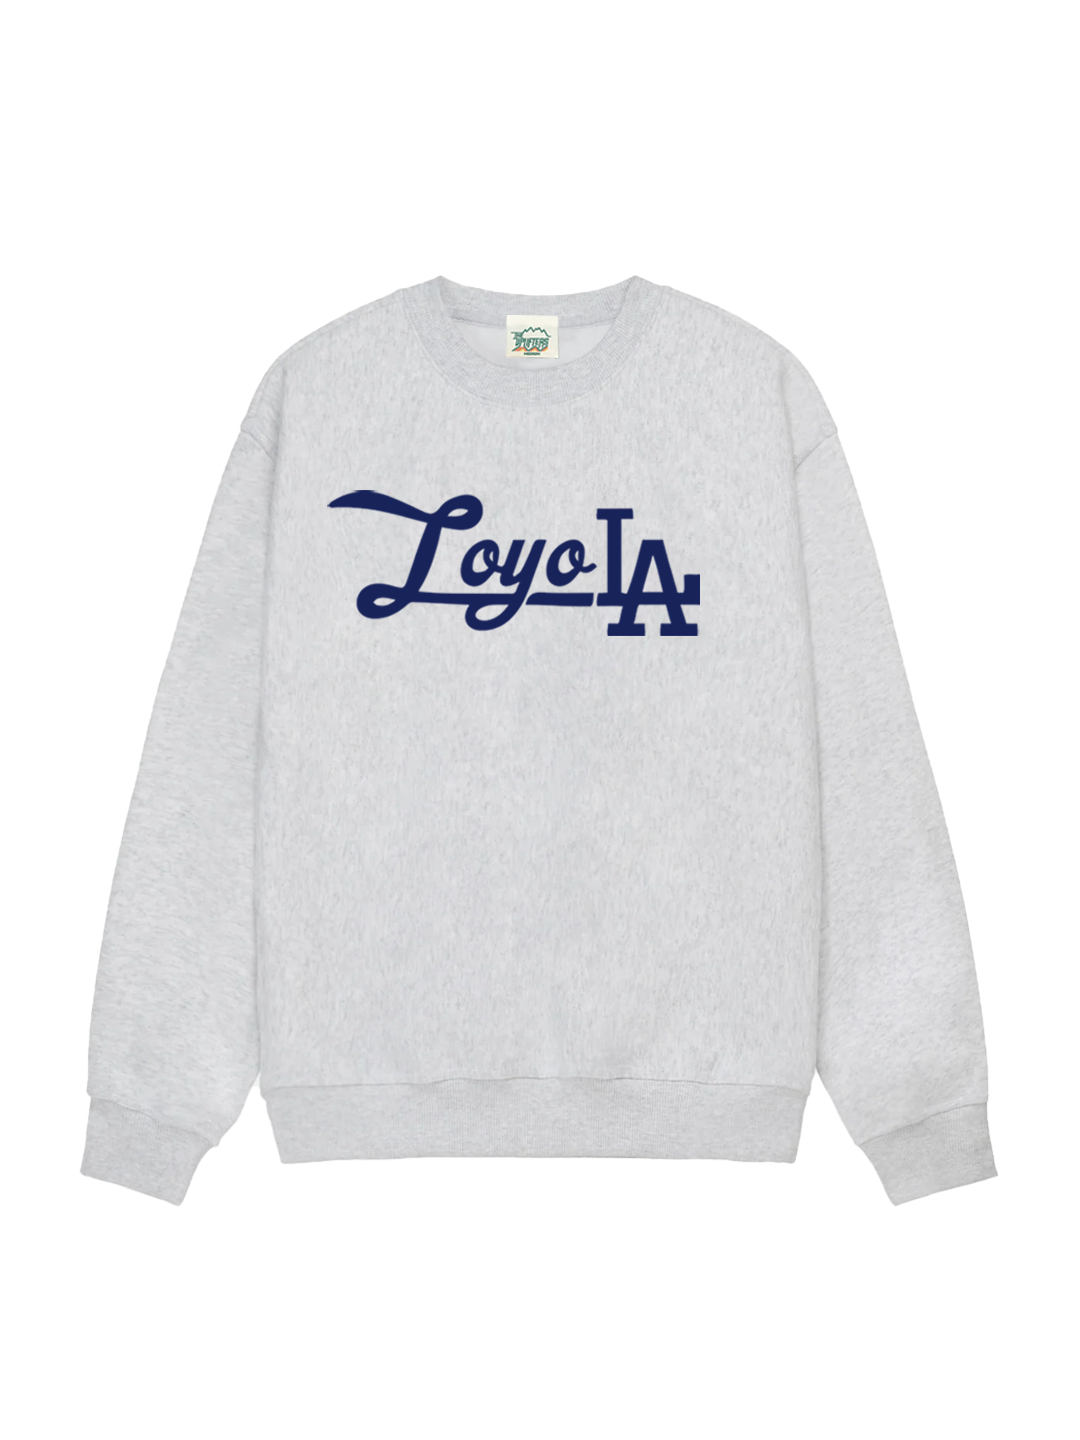 Loyola Crewneck Sweatshirt in Heather Grey